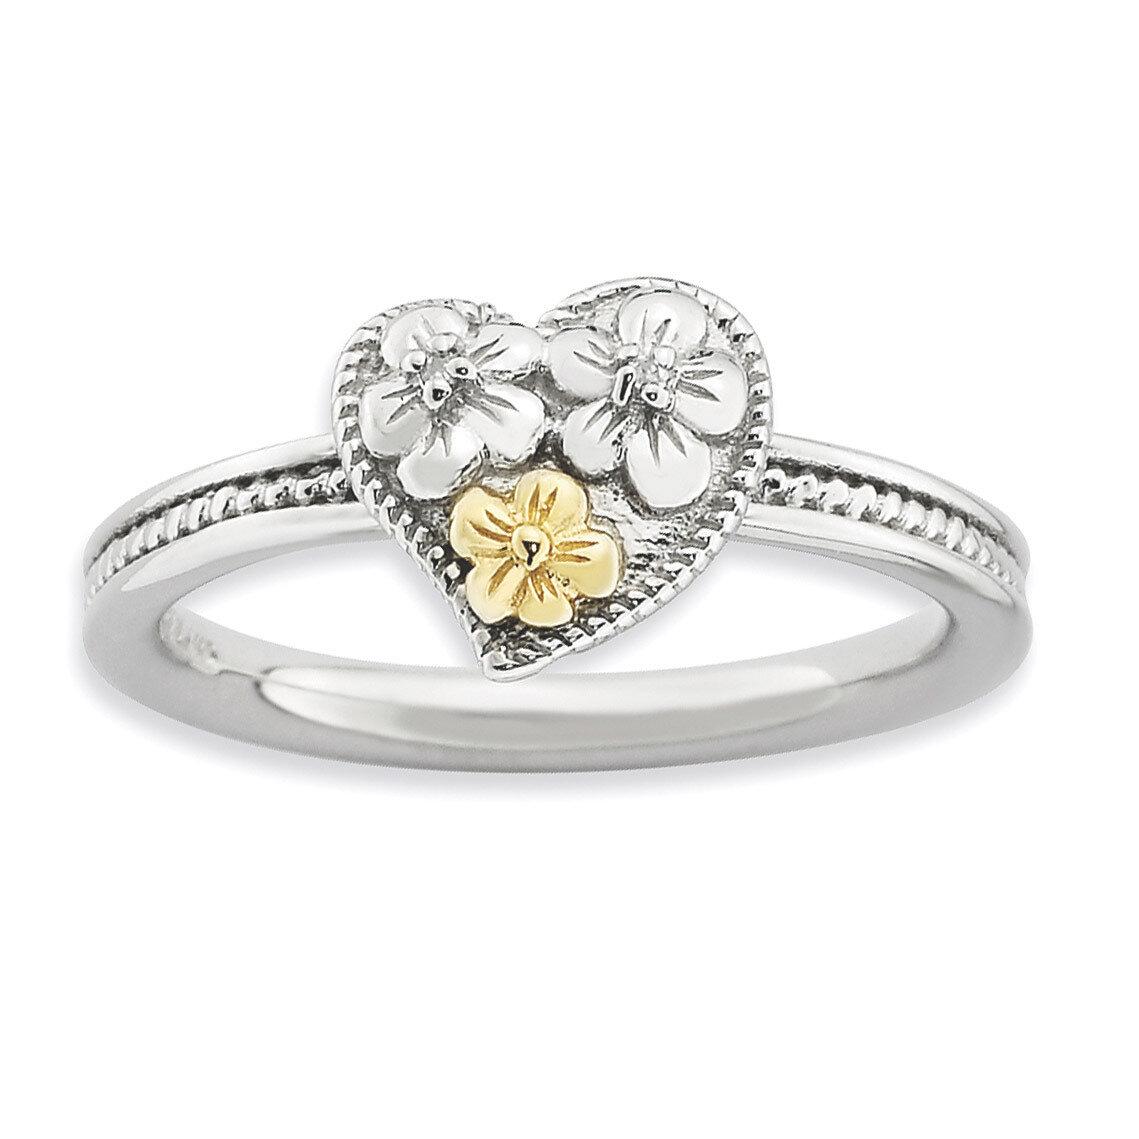 14k Gold Diamond Heart Ring - Sterling Silver QSK911